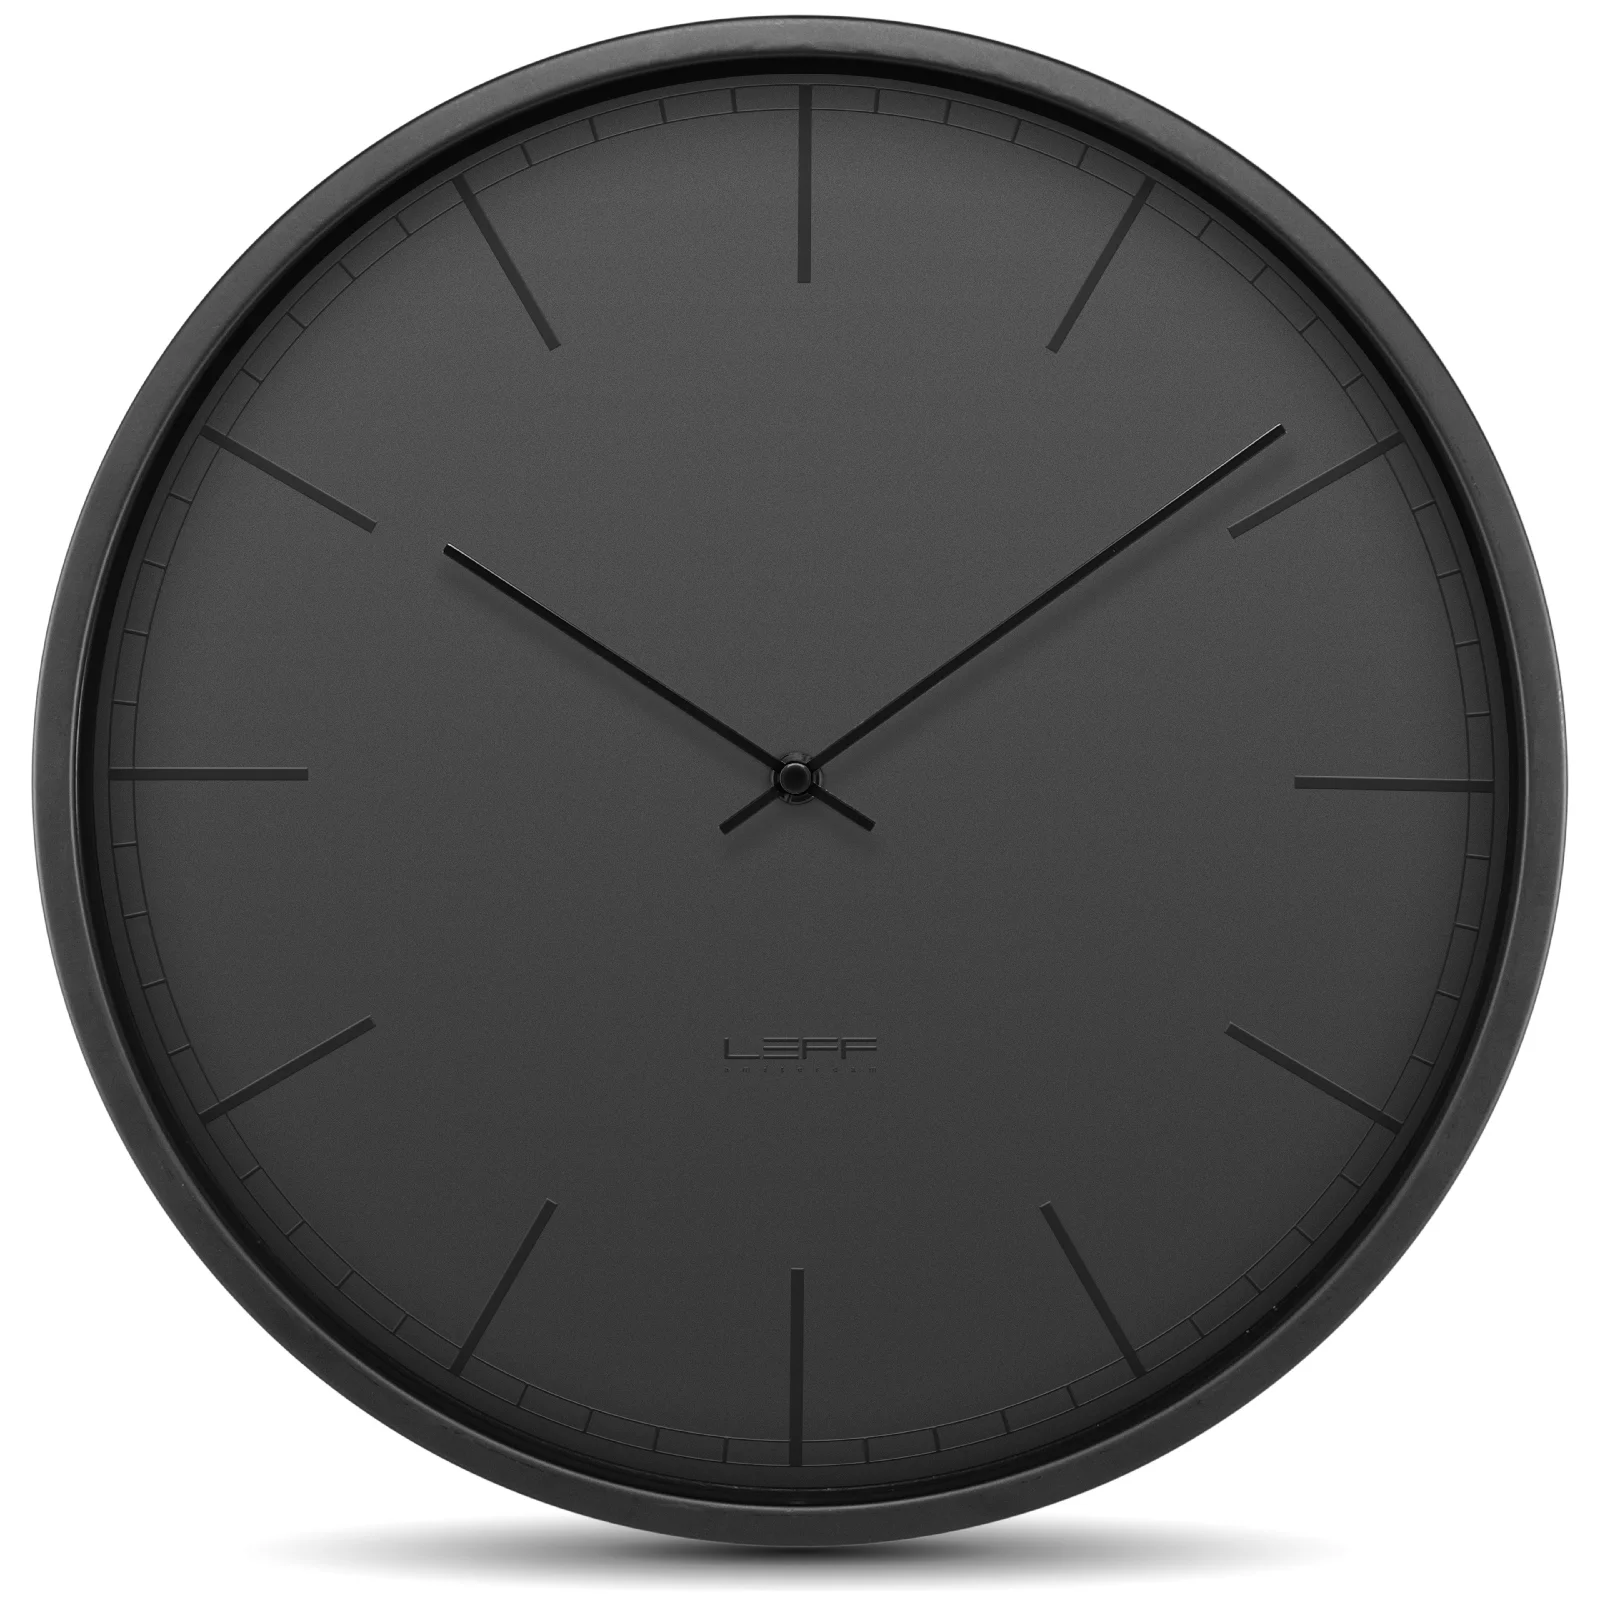 LEFF Amsterdam Tone Wall Clock 35cm - Black Image 1